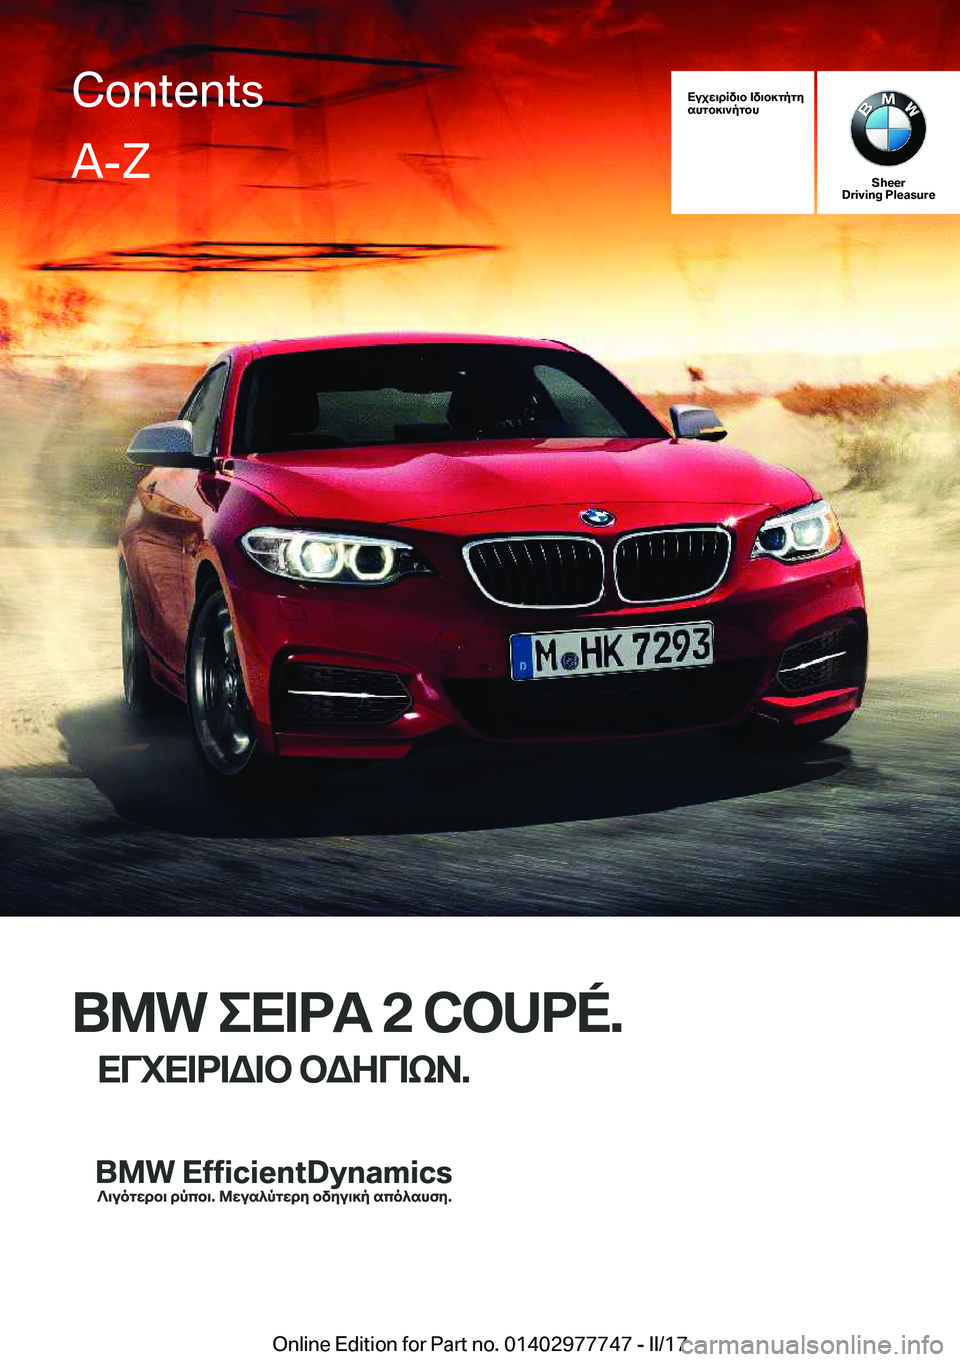 BMW 2 SERIES COUPE 2017  ΟΔΗΓΌΣ ΧΡΉΣΗΣ (in Greek) Xujw\dRv\b�=v\b]gpgy
shgb]\`pgbh
�S�h�e�e�r
�D�r�i�v�i�n�g��P�l�e�a�s�u�r�e
�B�M�W�eX=dT��2��C�O�U�P�